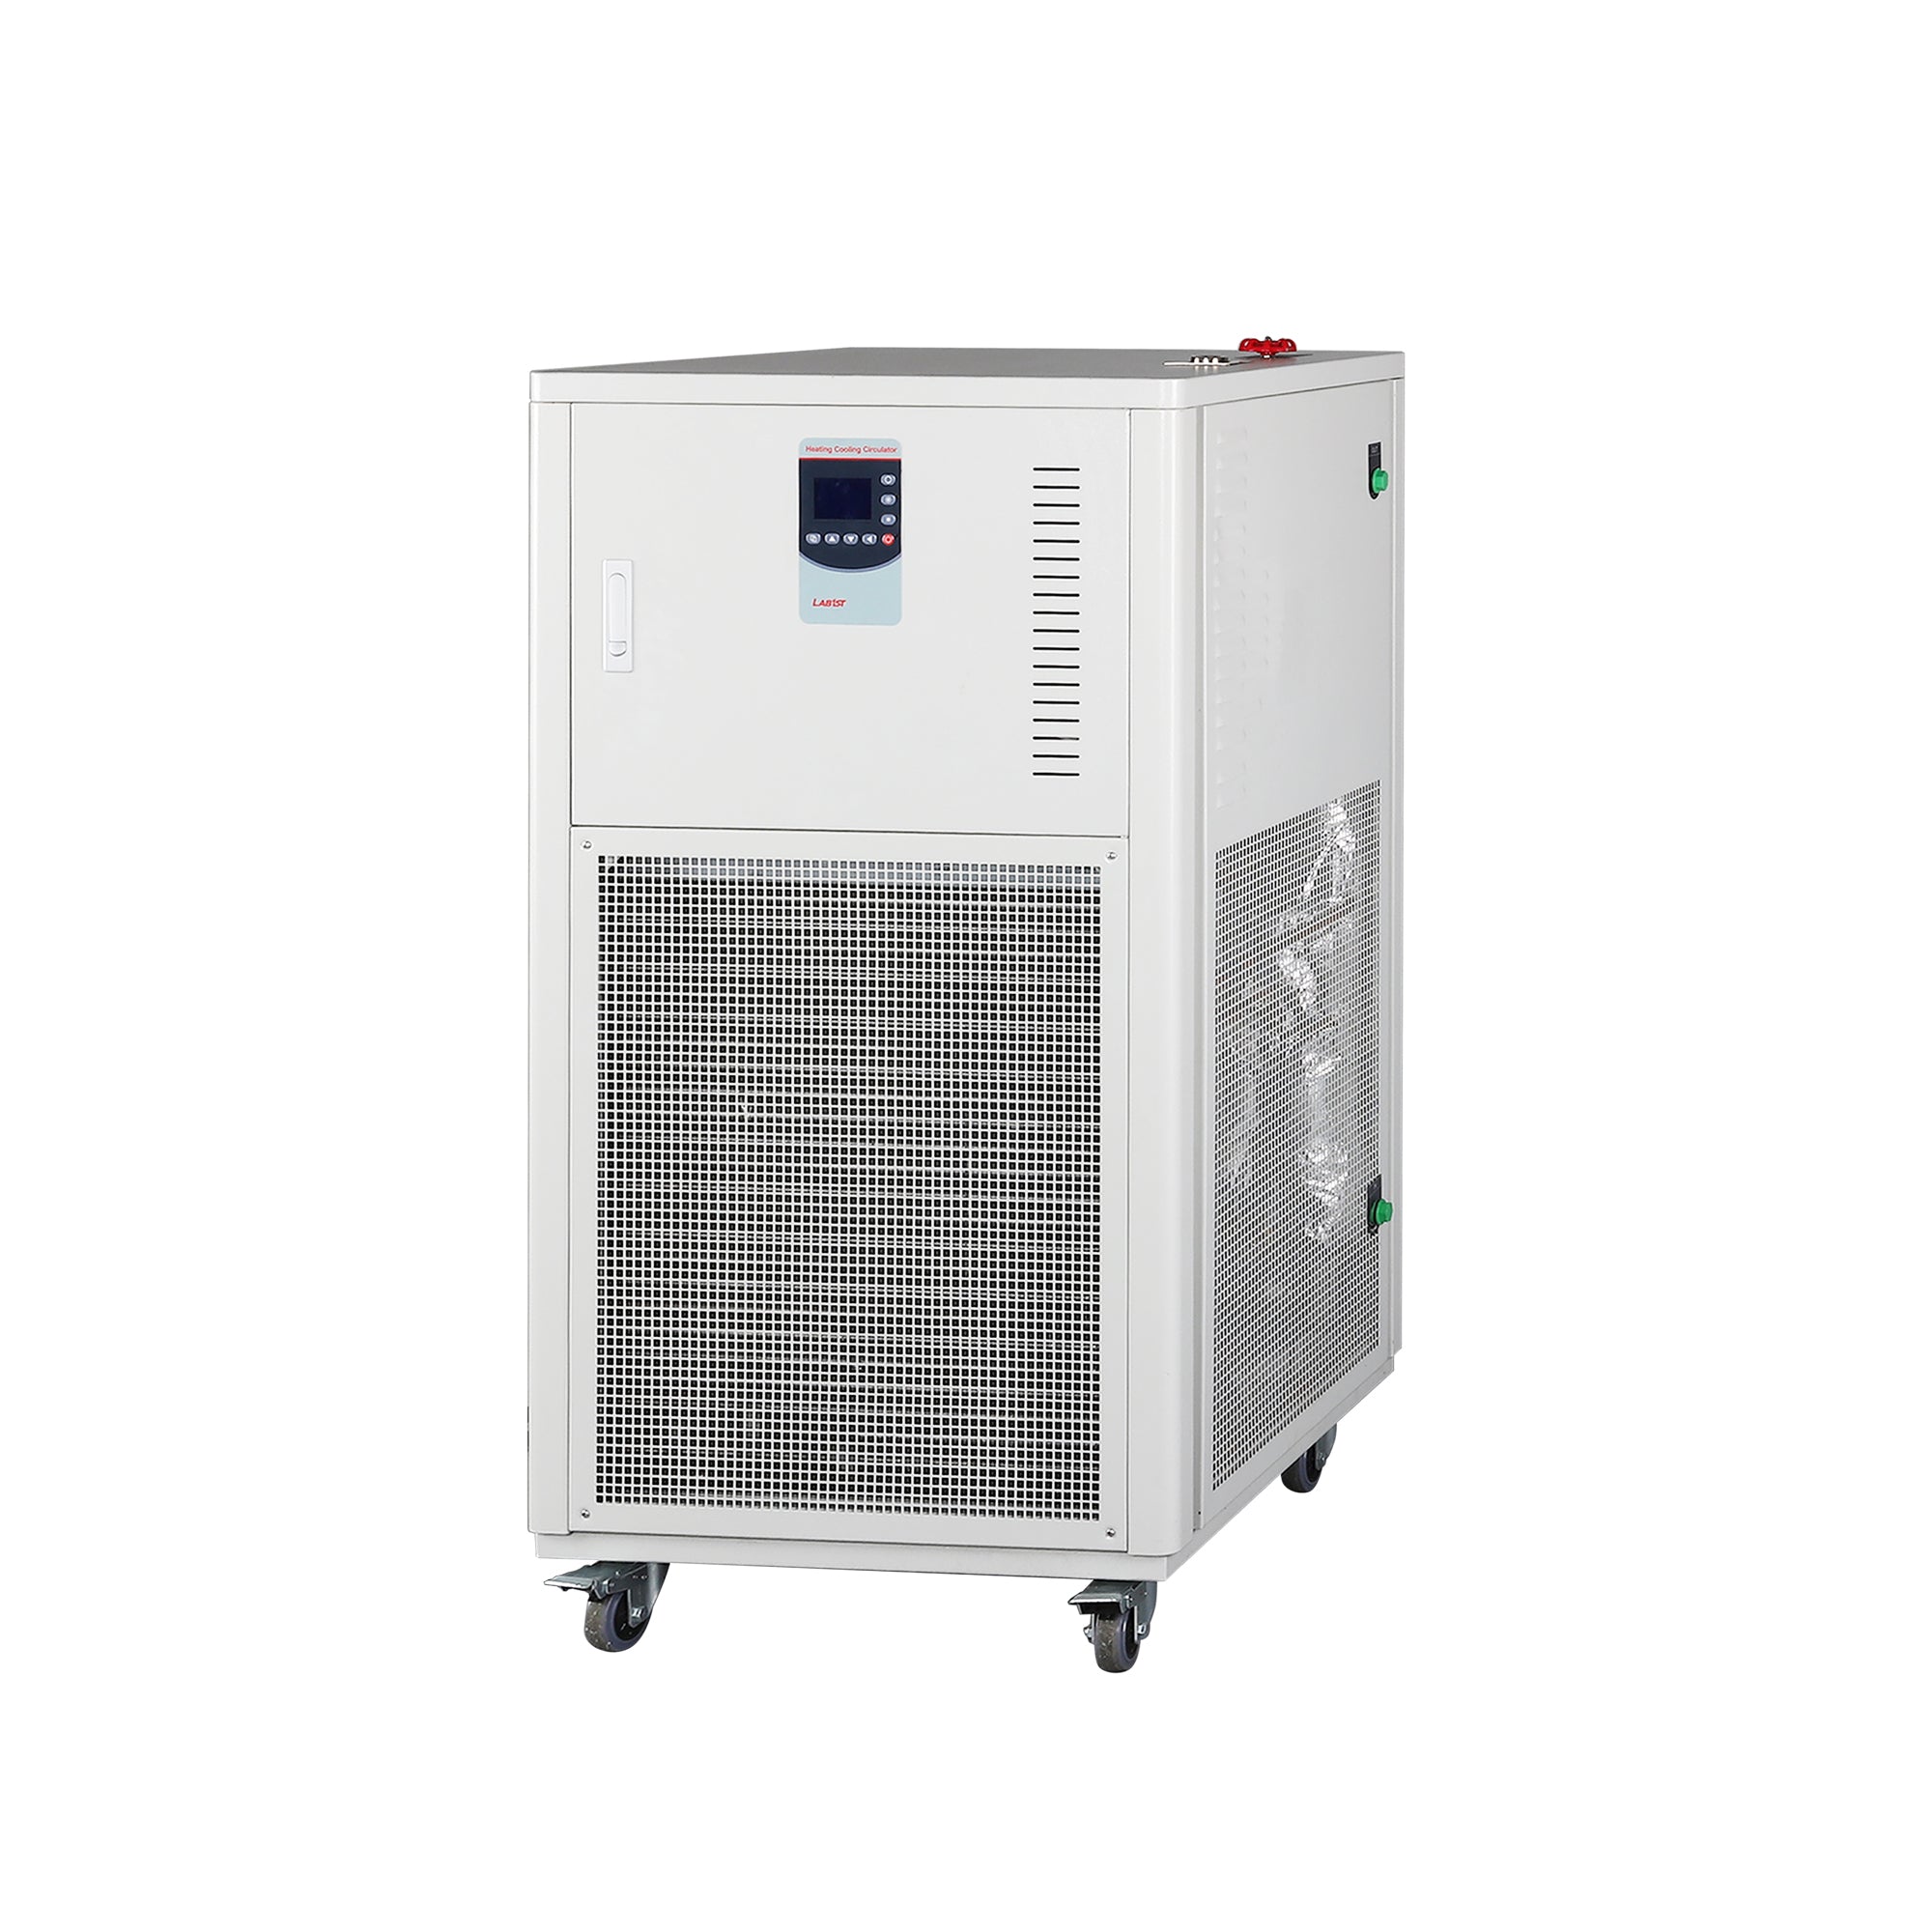 25kW -25~200℃ Hermatic Heating Cooling Circulator